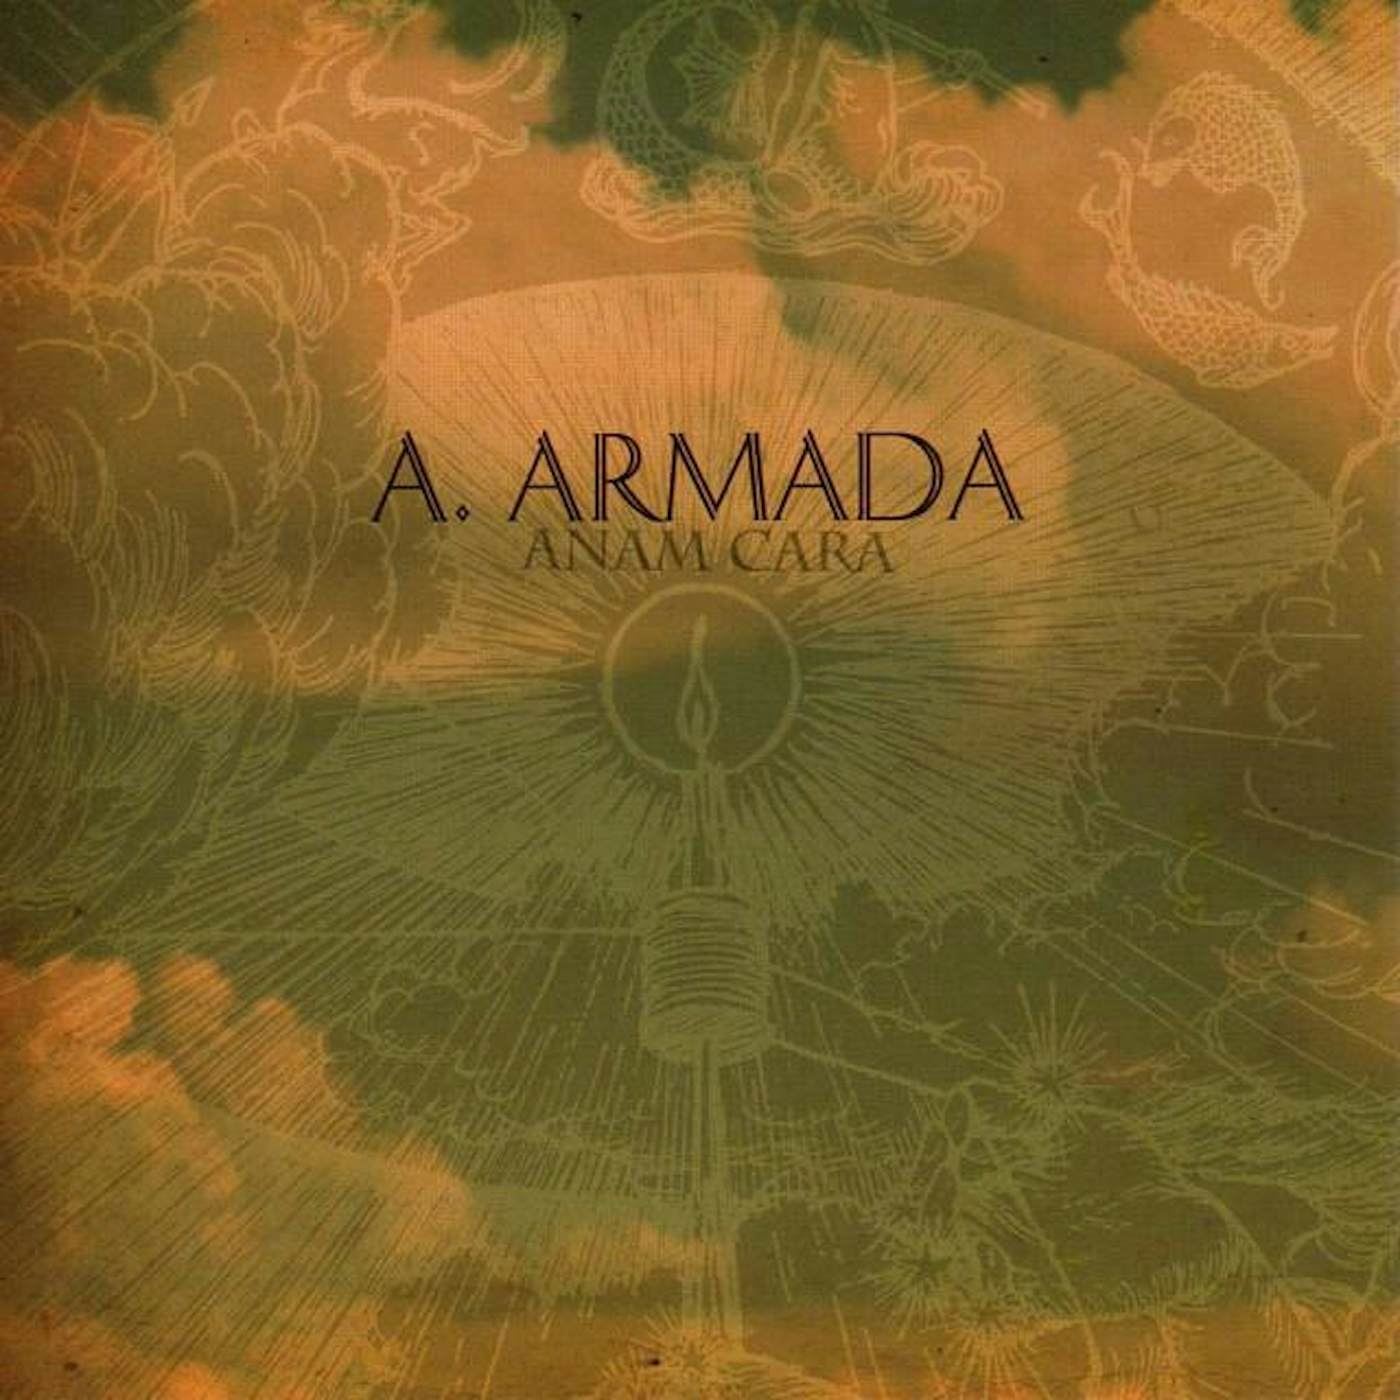 A. Armada